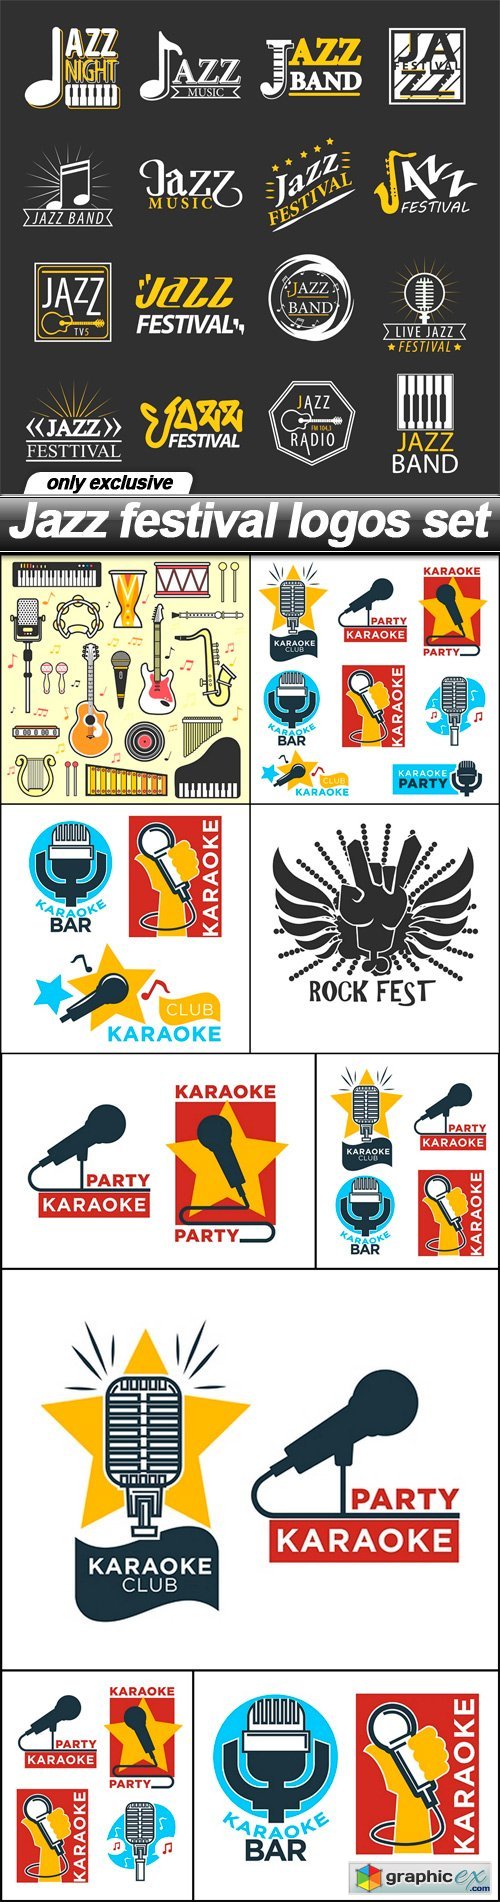 Jazz festival logos set - 10 EPS